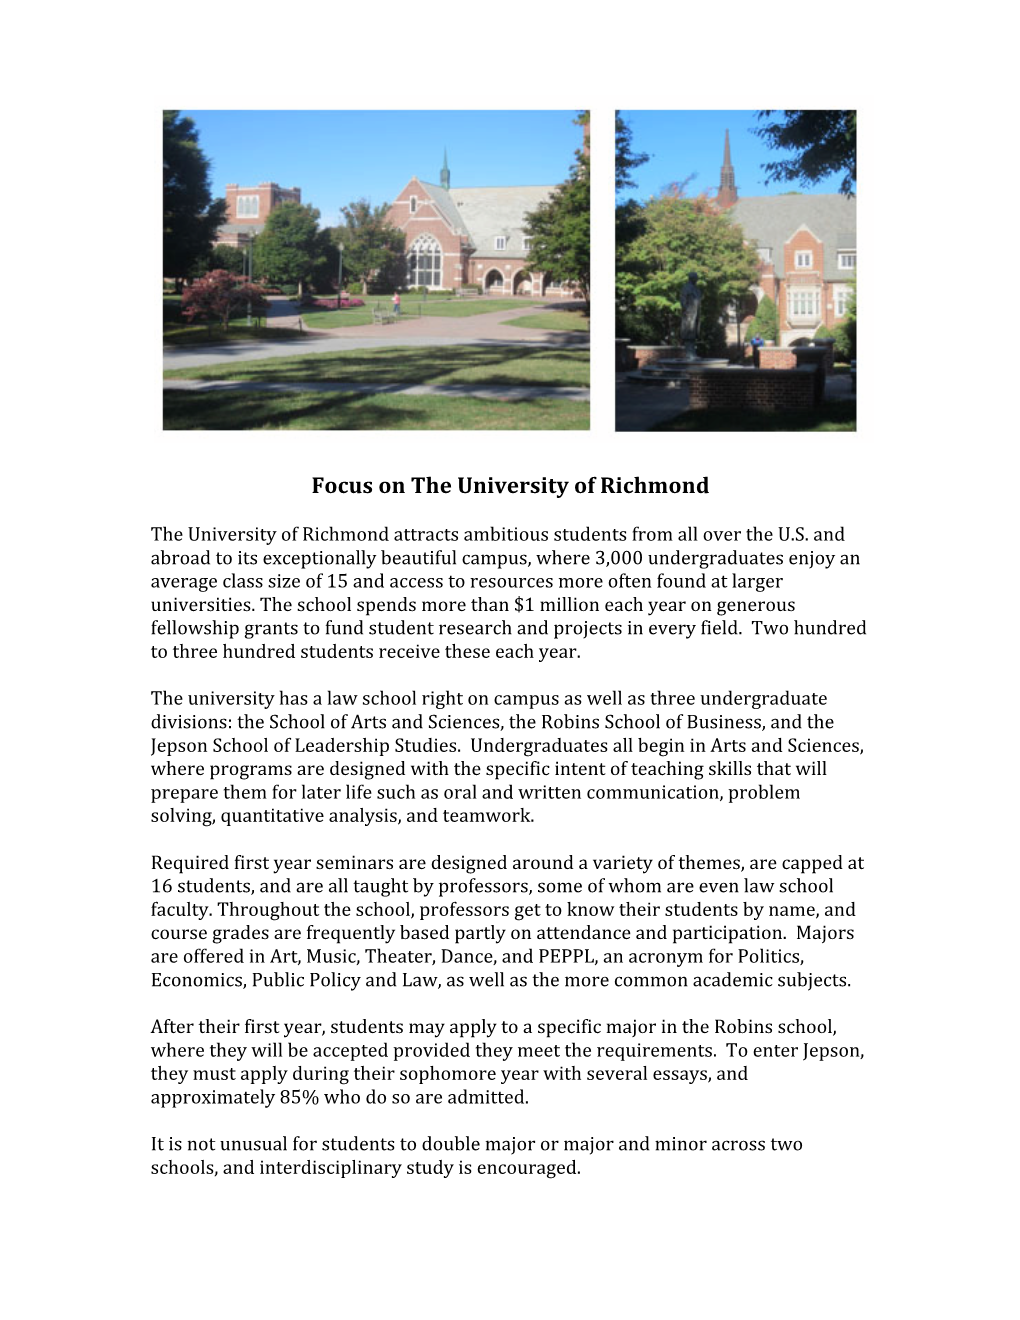 Focus on the University of Richmond